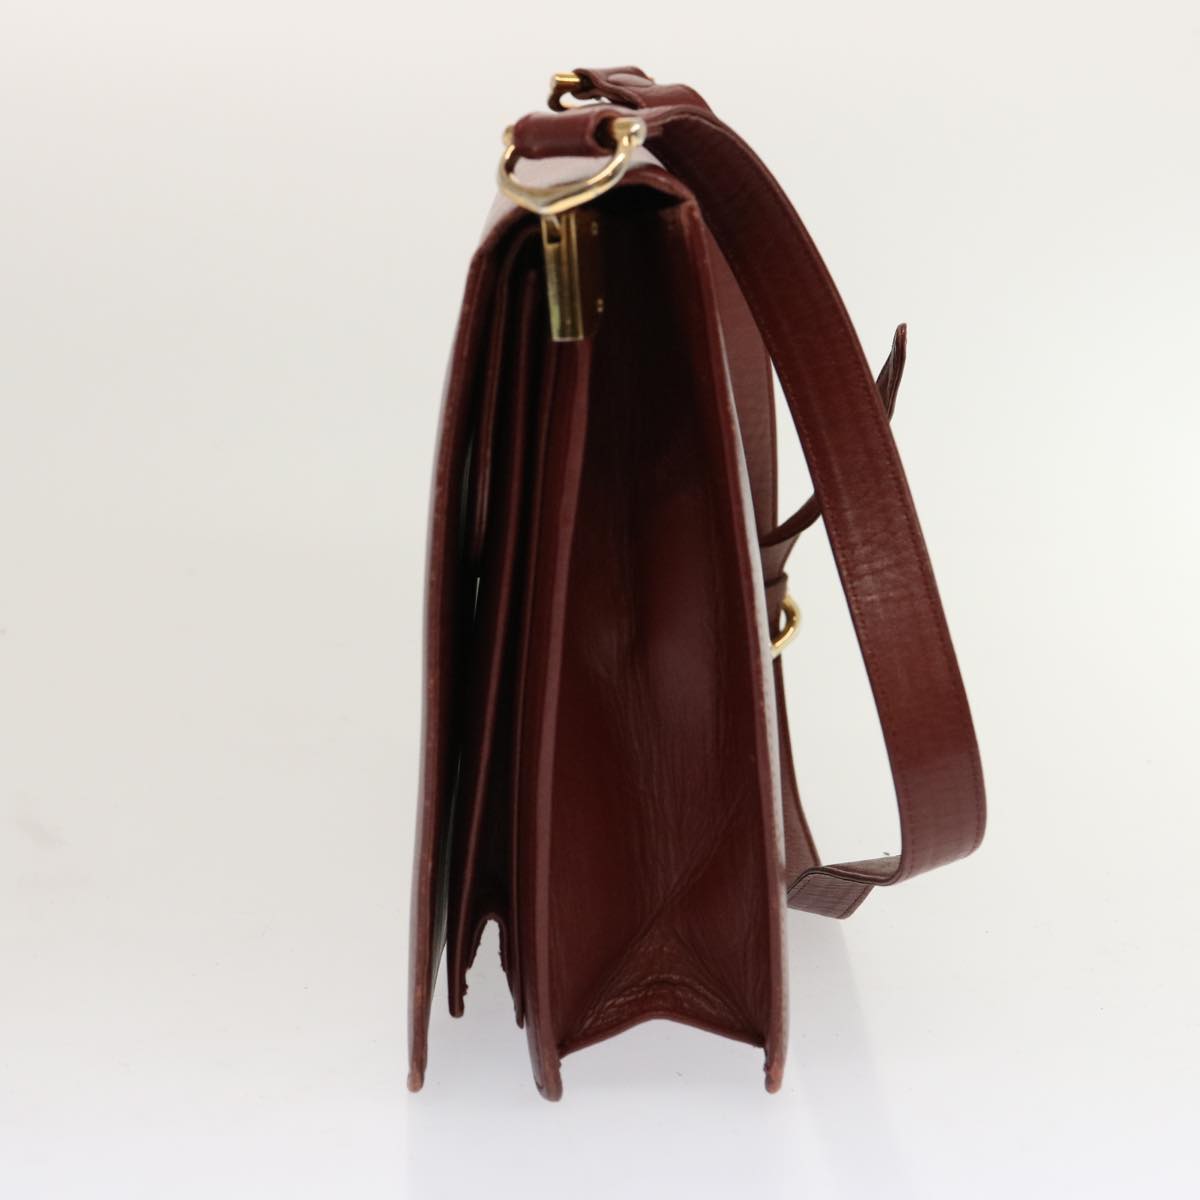 CARTIER Clutch Bag Shoulder Bag Leather 2Set Wine Red Auth 68345